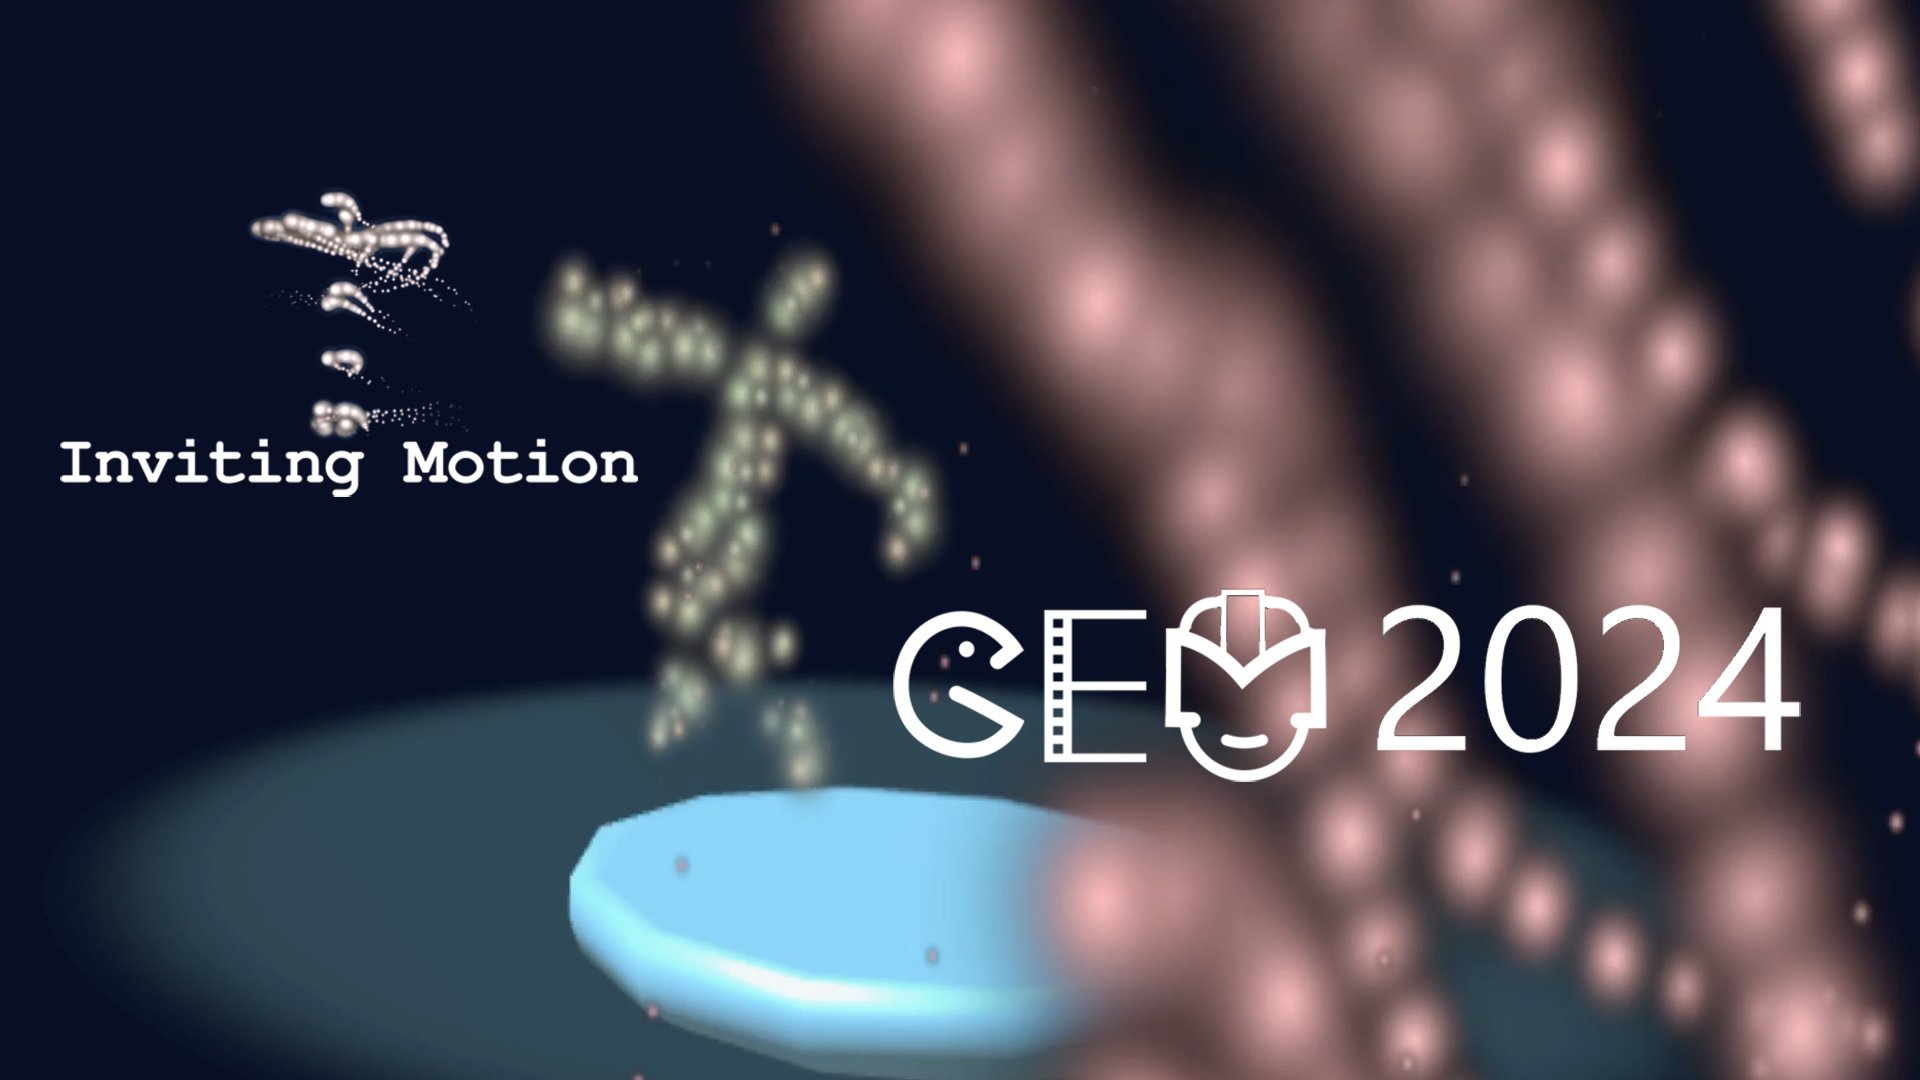 Demo at IEEE GEM 2024